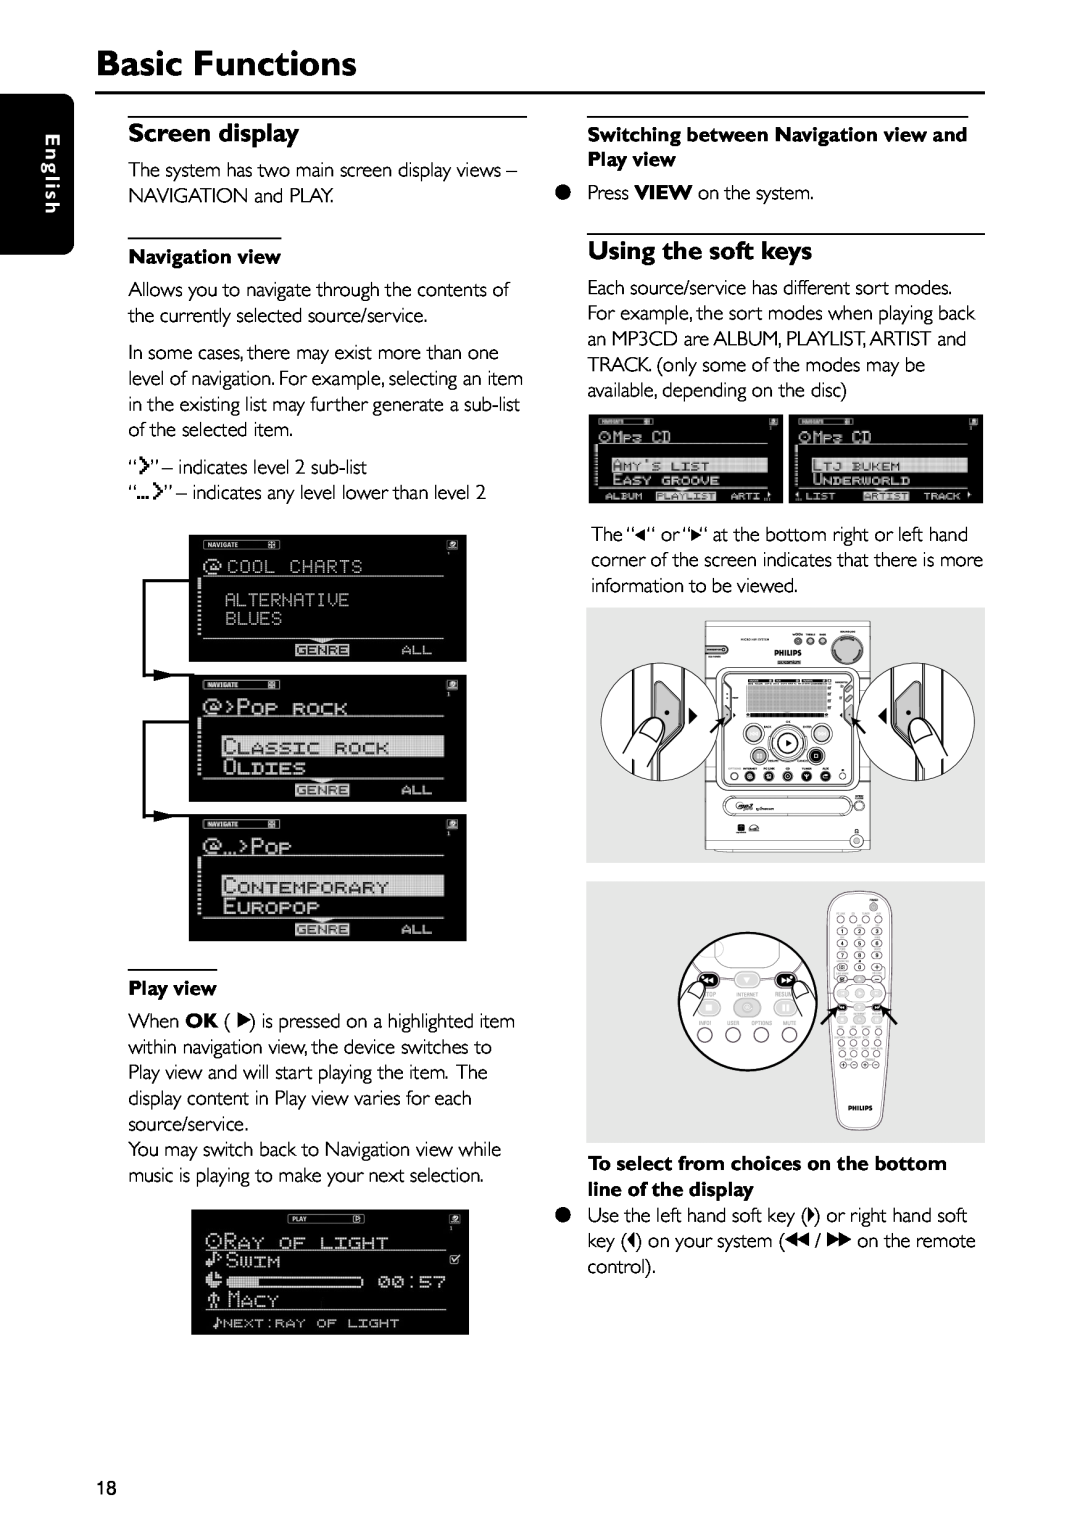 Philips MC-I200MC-I200 Screen display, Using the soft keys, Basic Functions, E n g l i s h, Navigation view, Play view 